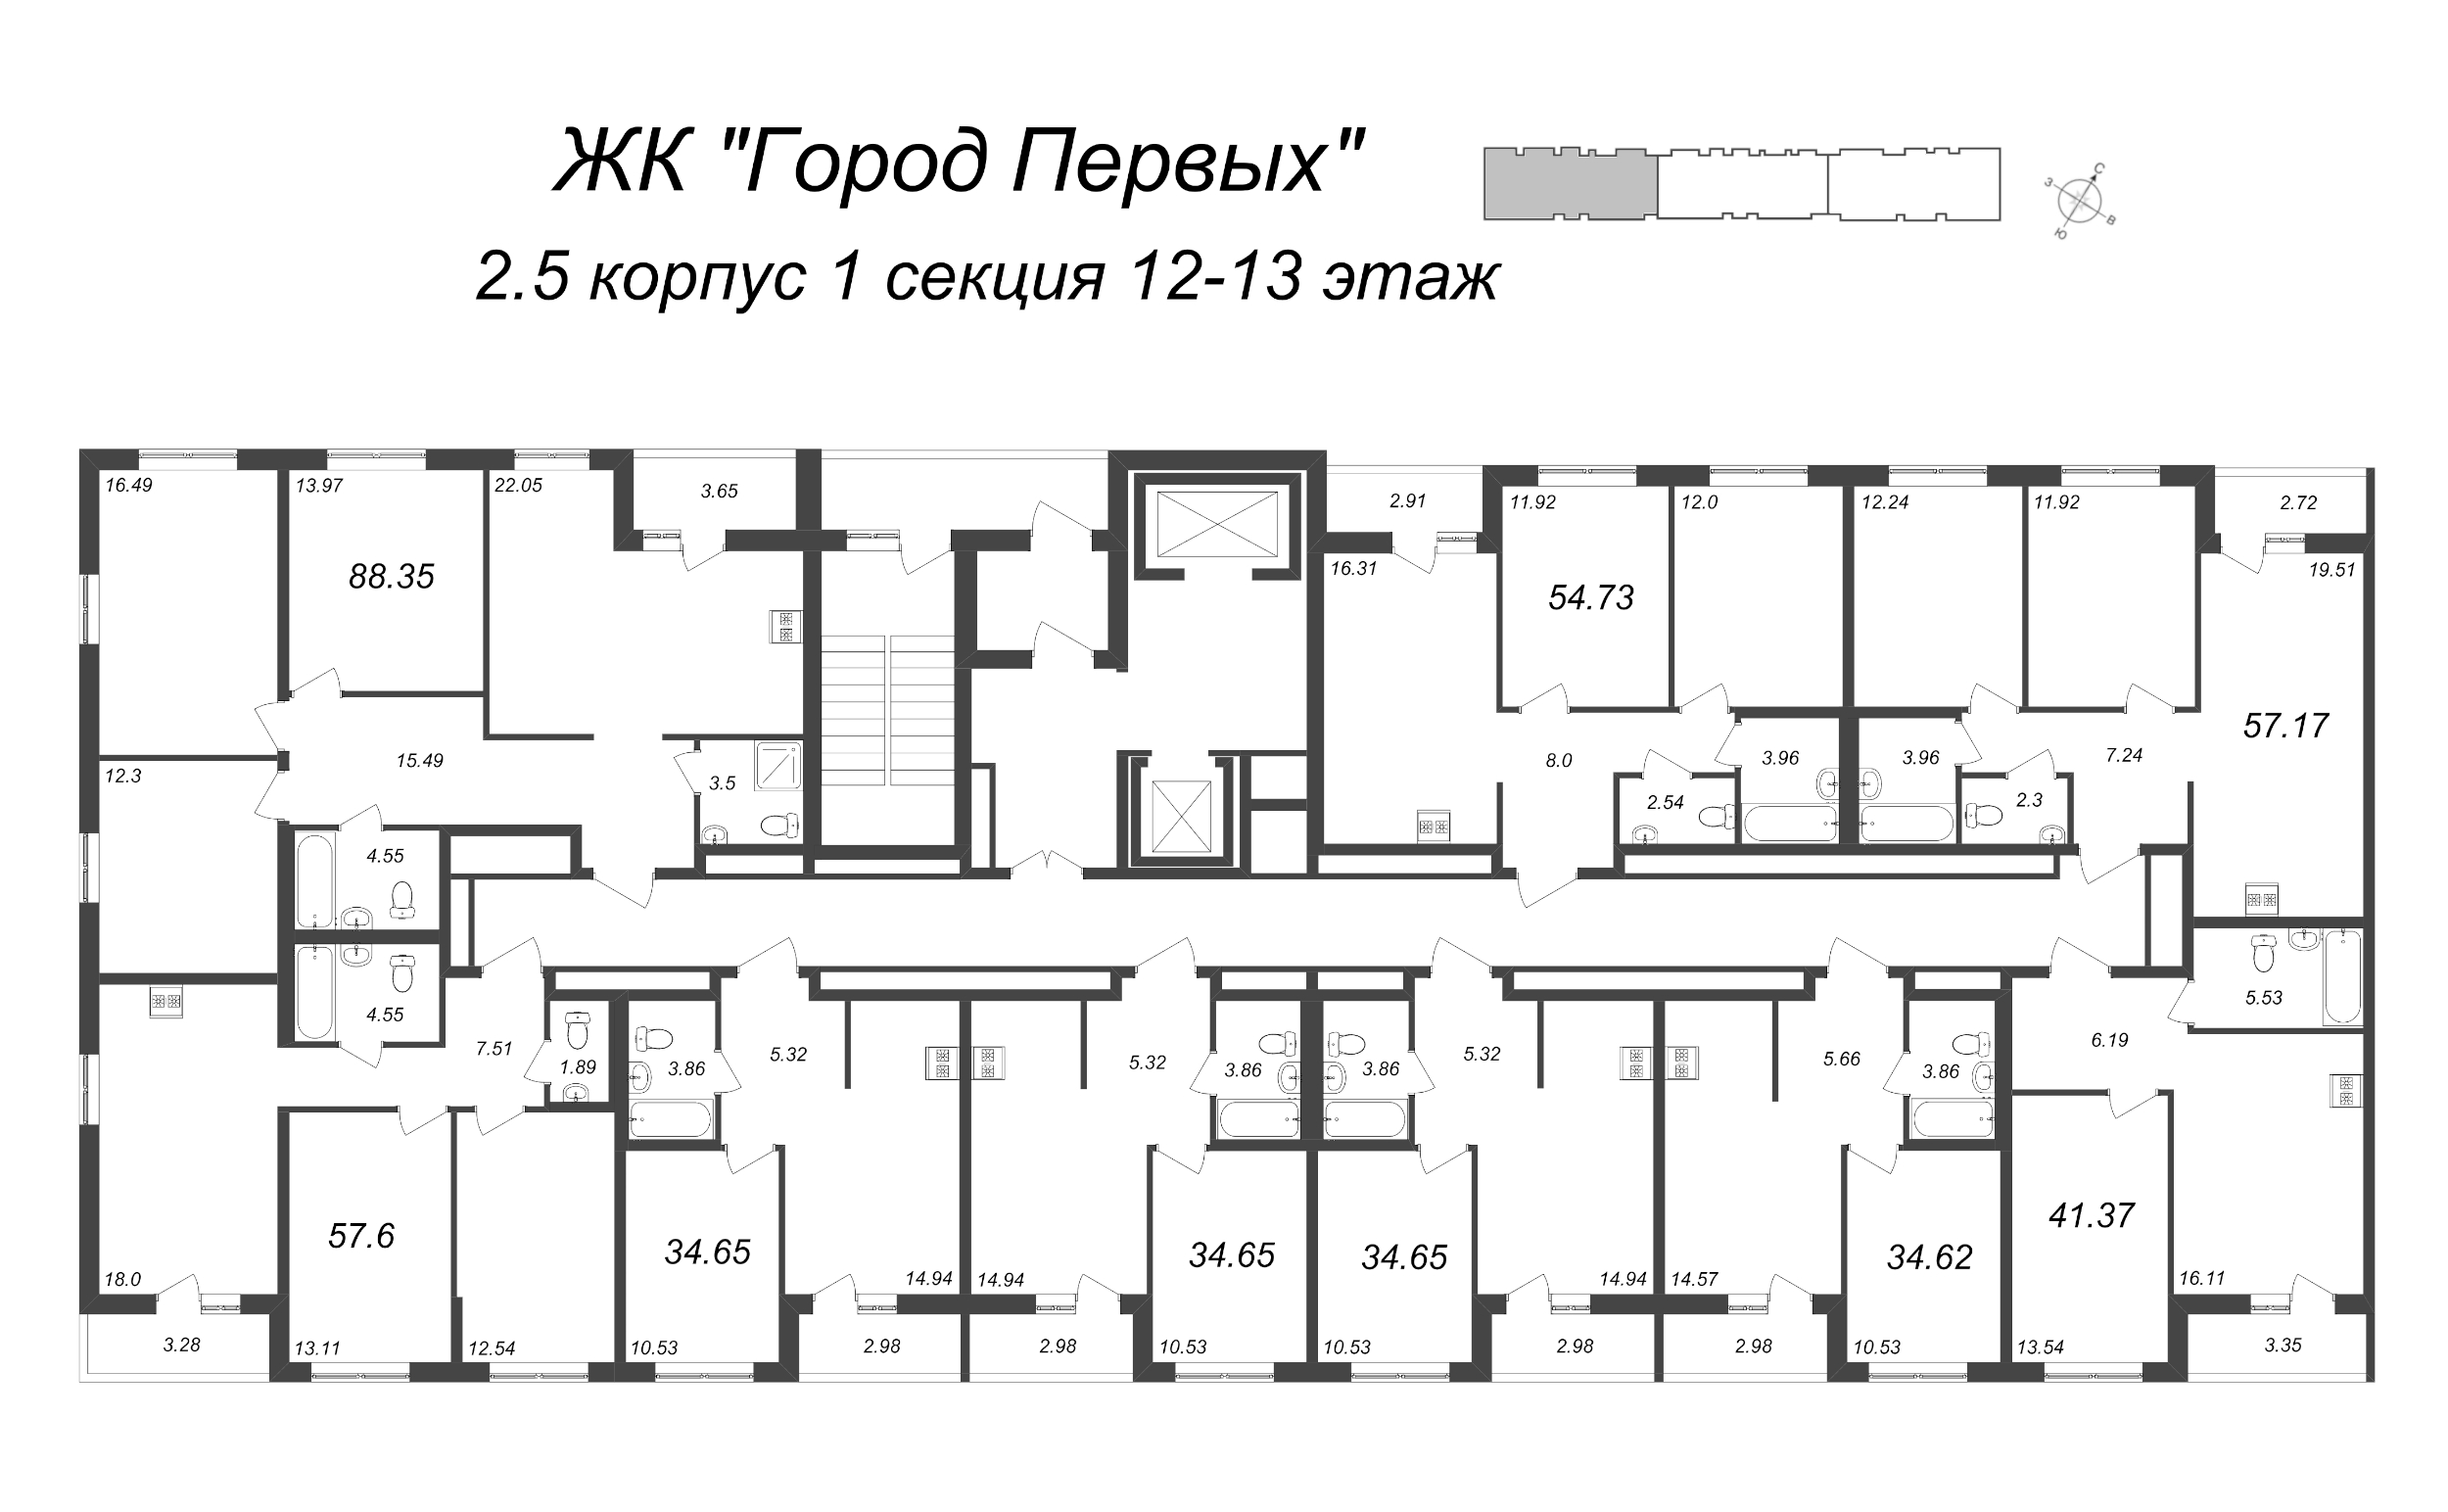 2-комнатная (Евро) квартира, 41.37 м² - планировка этажа